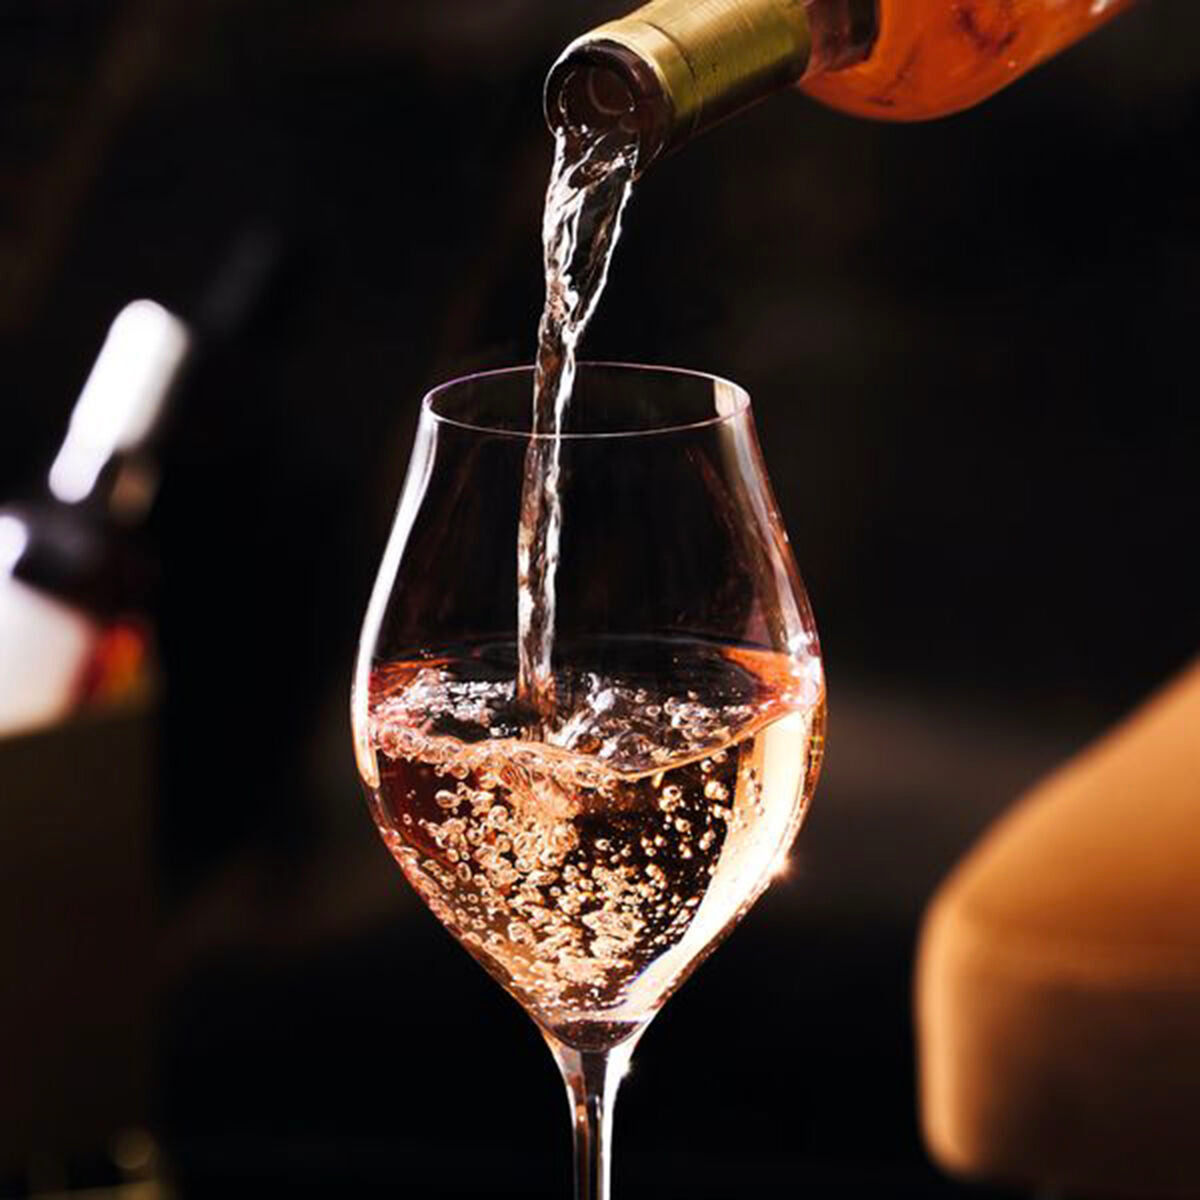 Wine glass set Chef&Sommelier Exaltation Transparent 380 ml (6 Units)